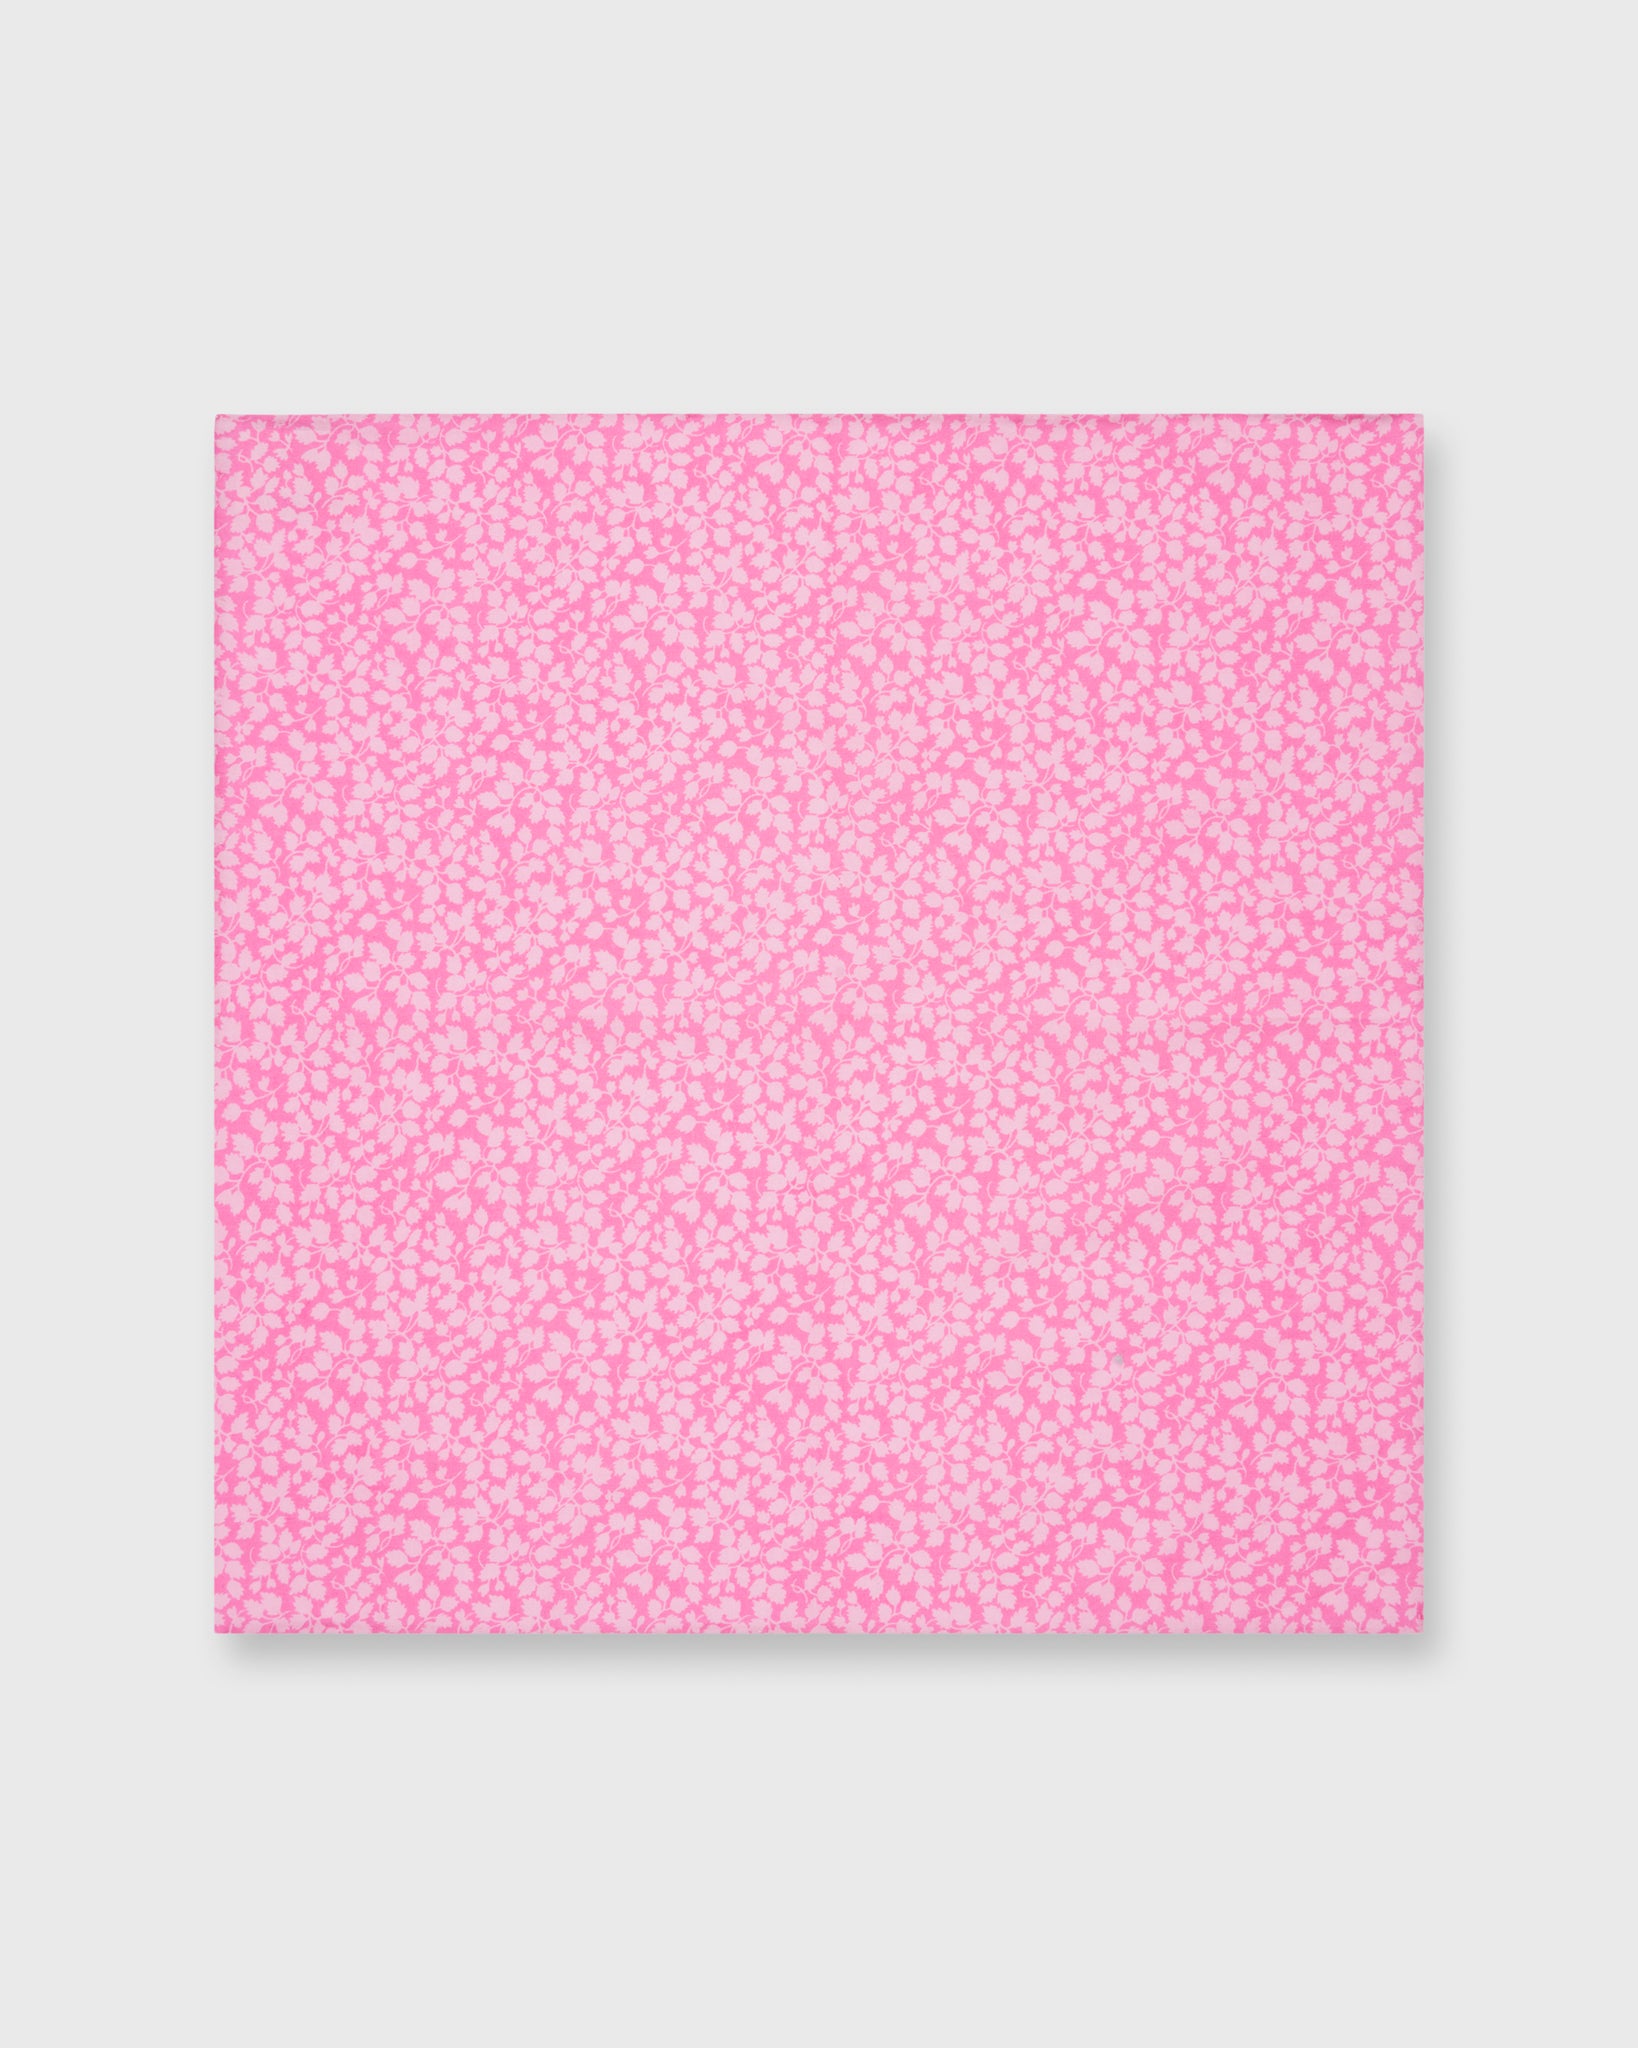 Cotton Print Pocket Square in Pink Glennjade Liberty Fabric